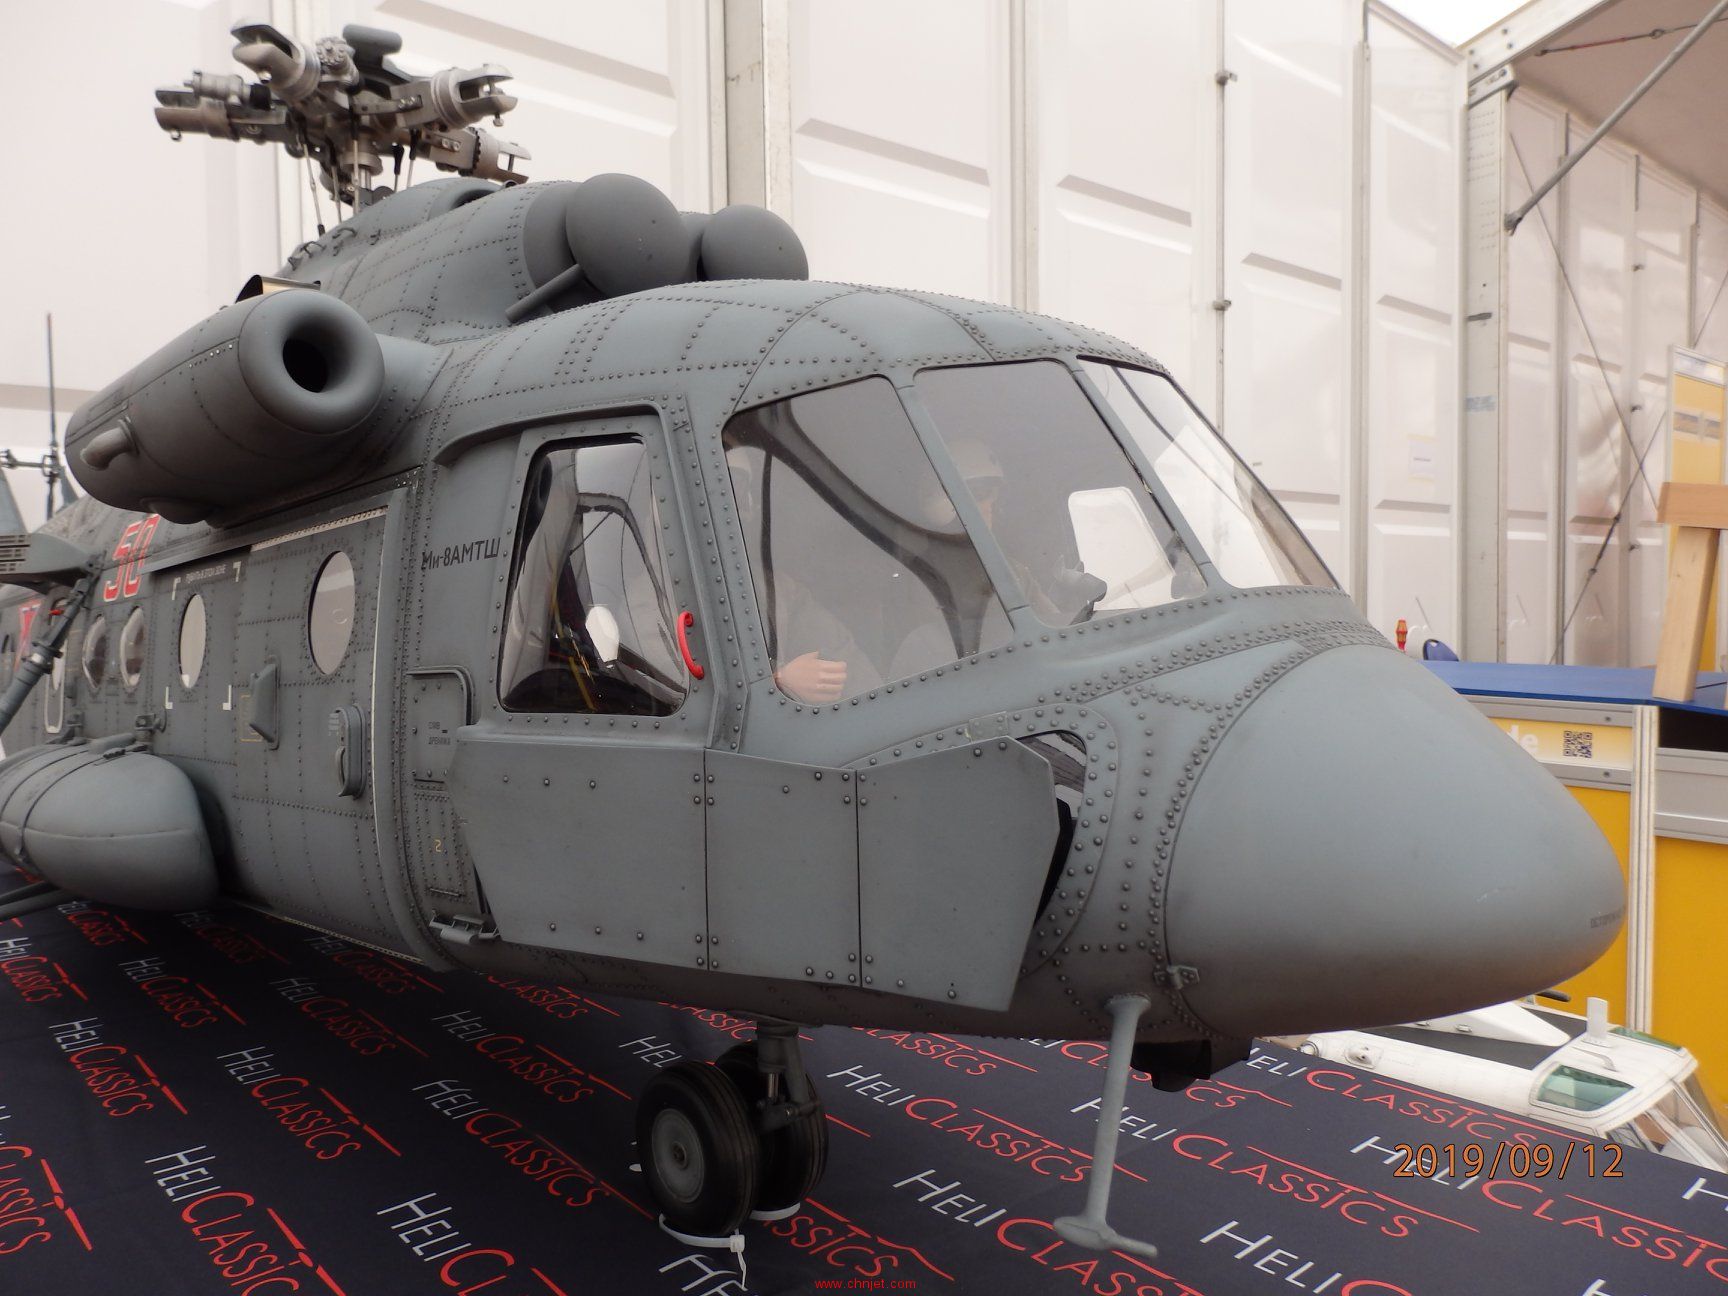 JET POWER 2019之Mil 117直升机